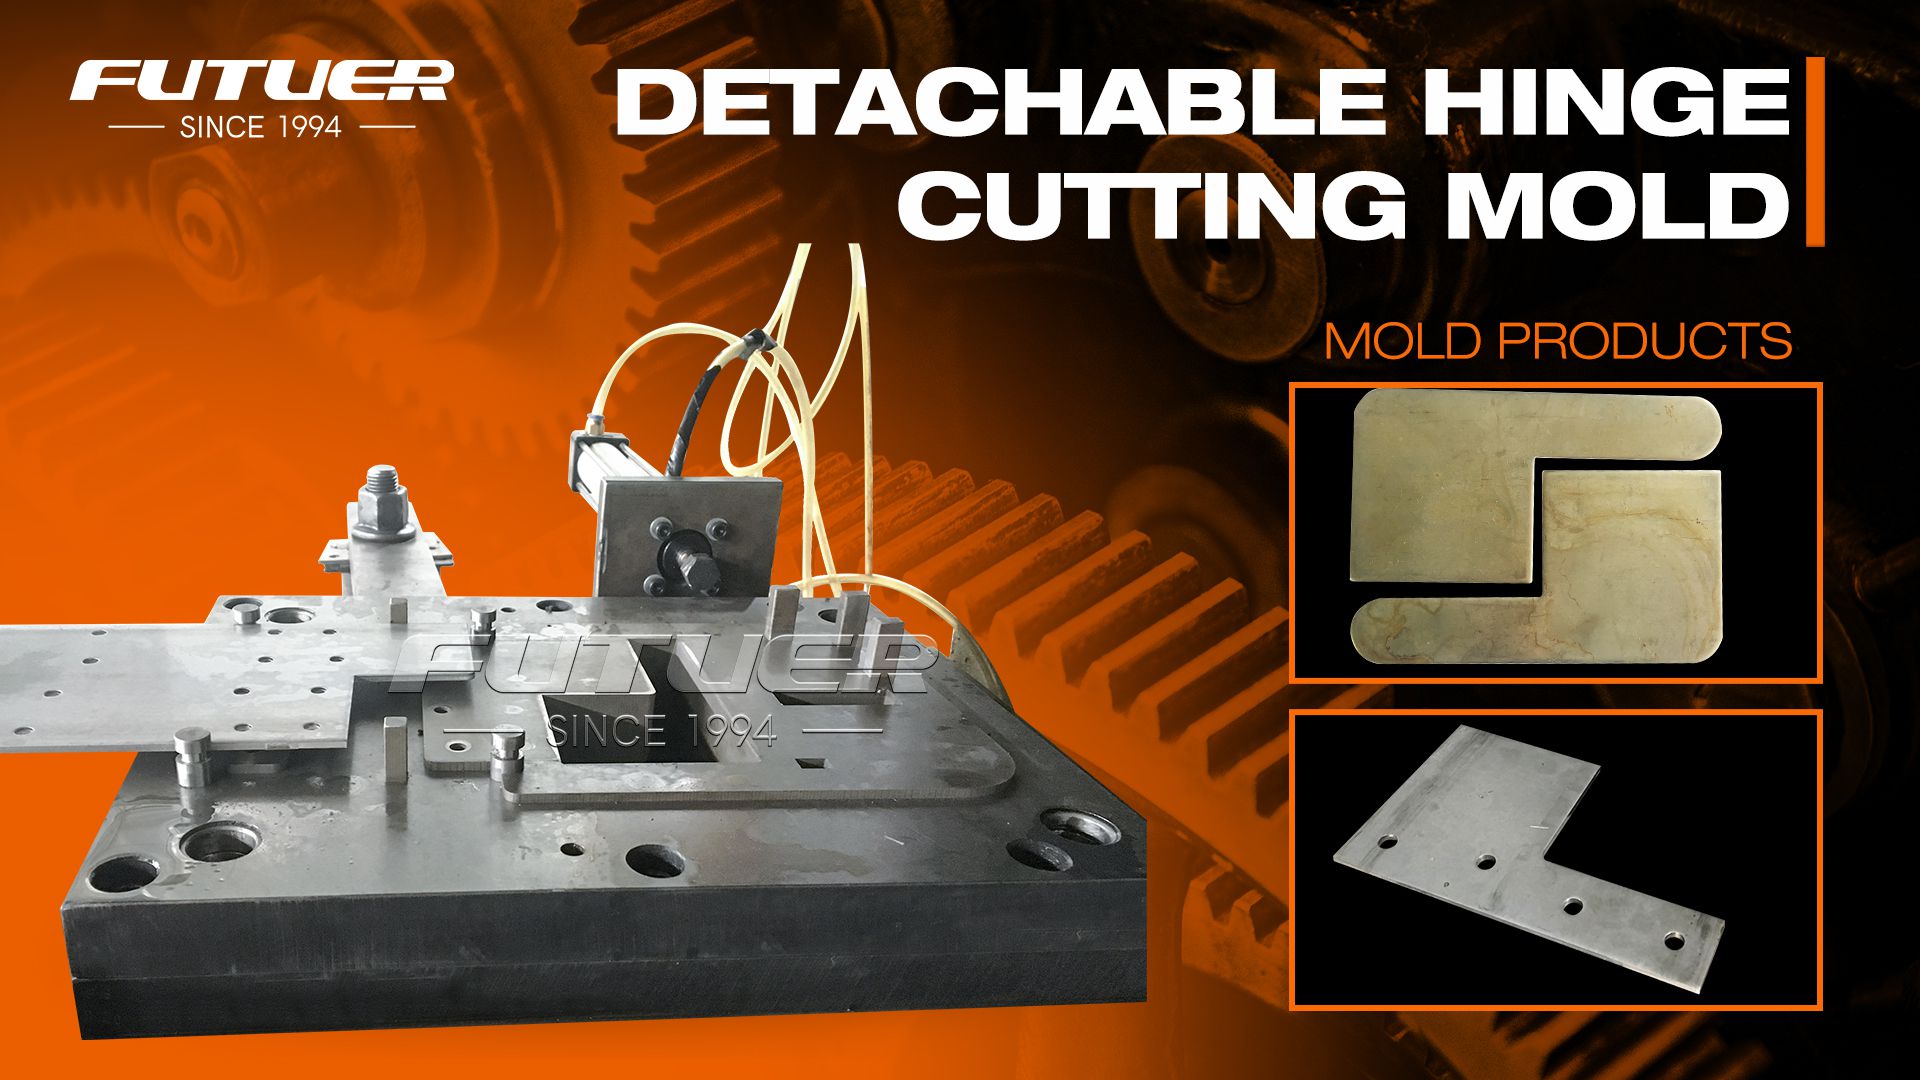 Detachable Hinge Cutting Mold